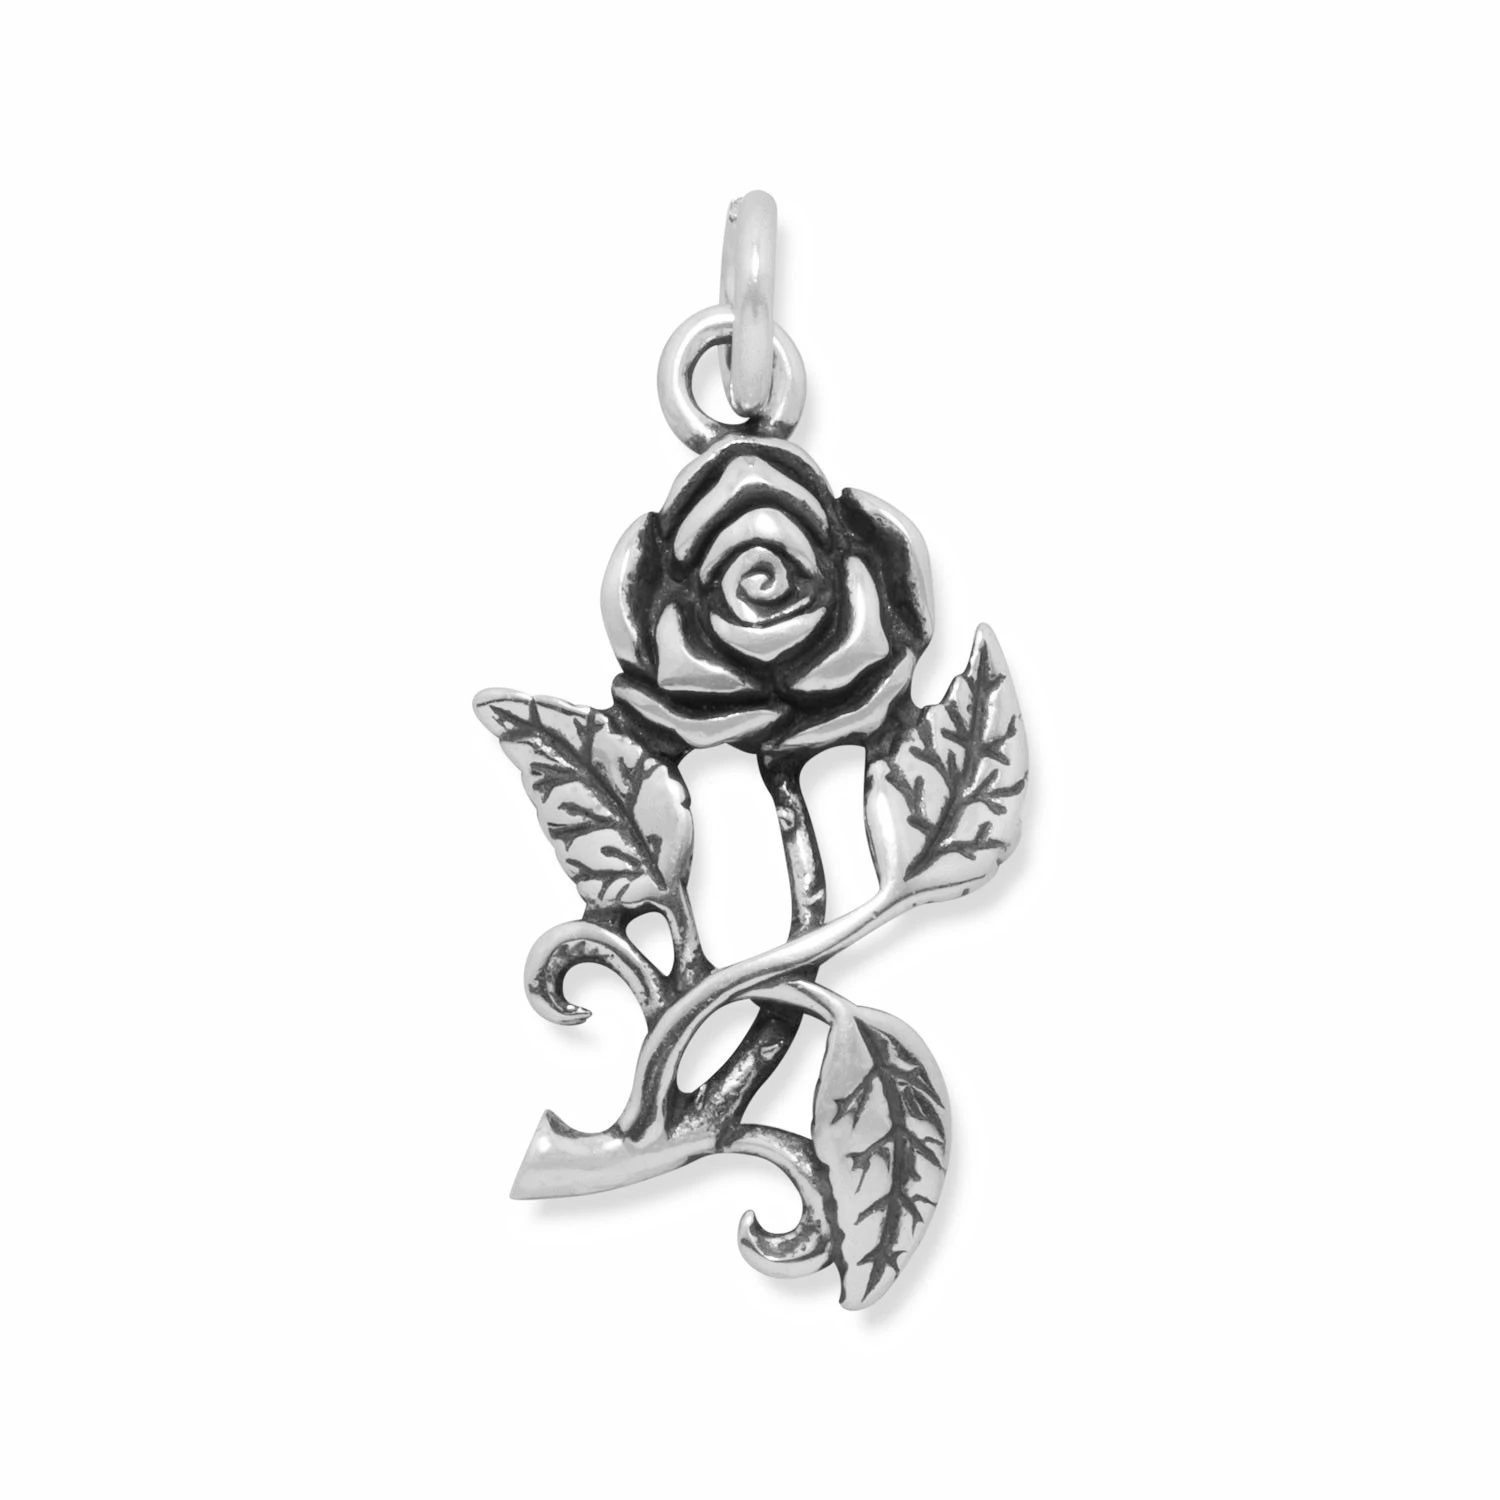 Oxidized Rose Silver Keepsake Charm by MMADROP $18.00 | Spirit Pieces